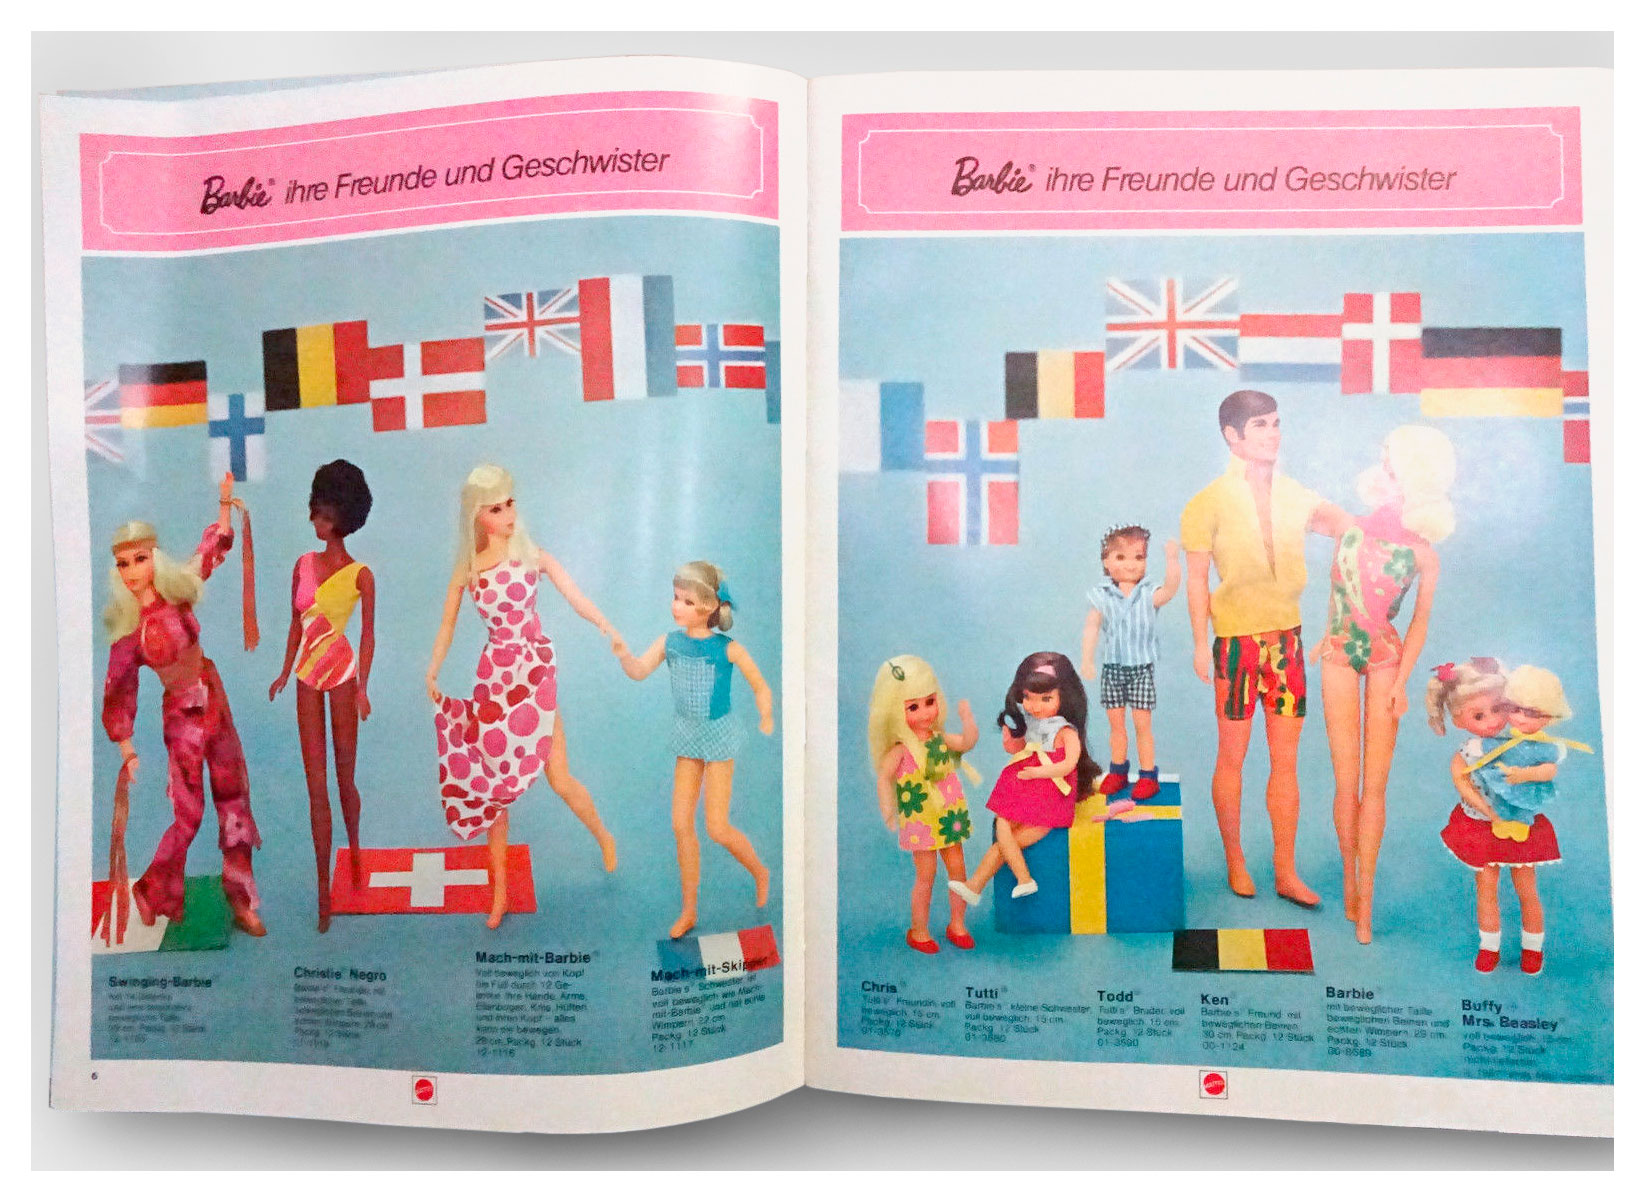 From German Mattel Spielzeug '73 catalogue